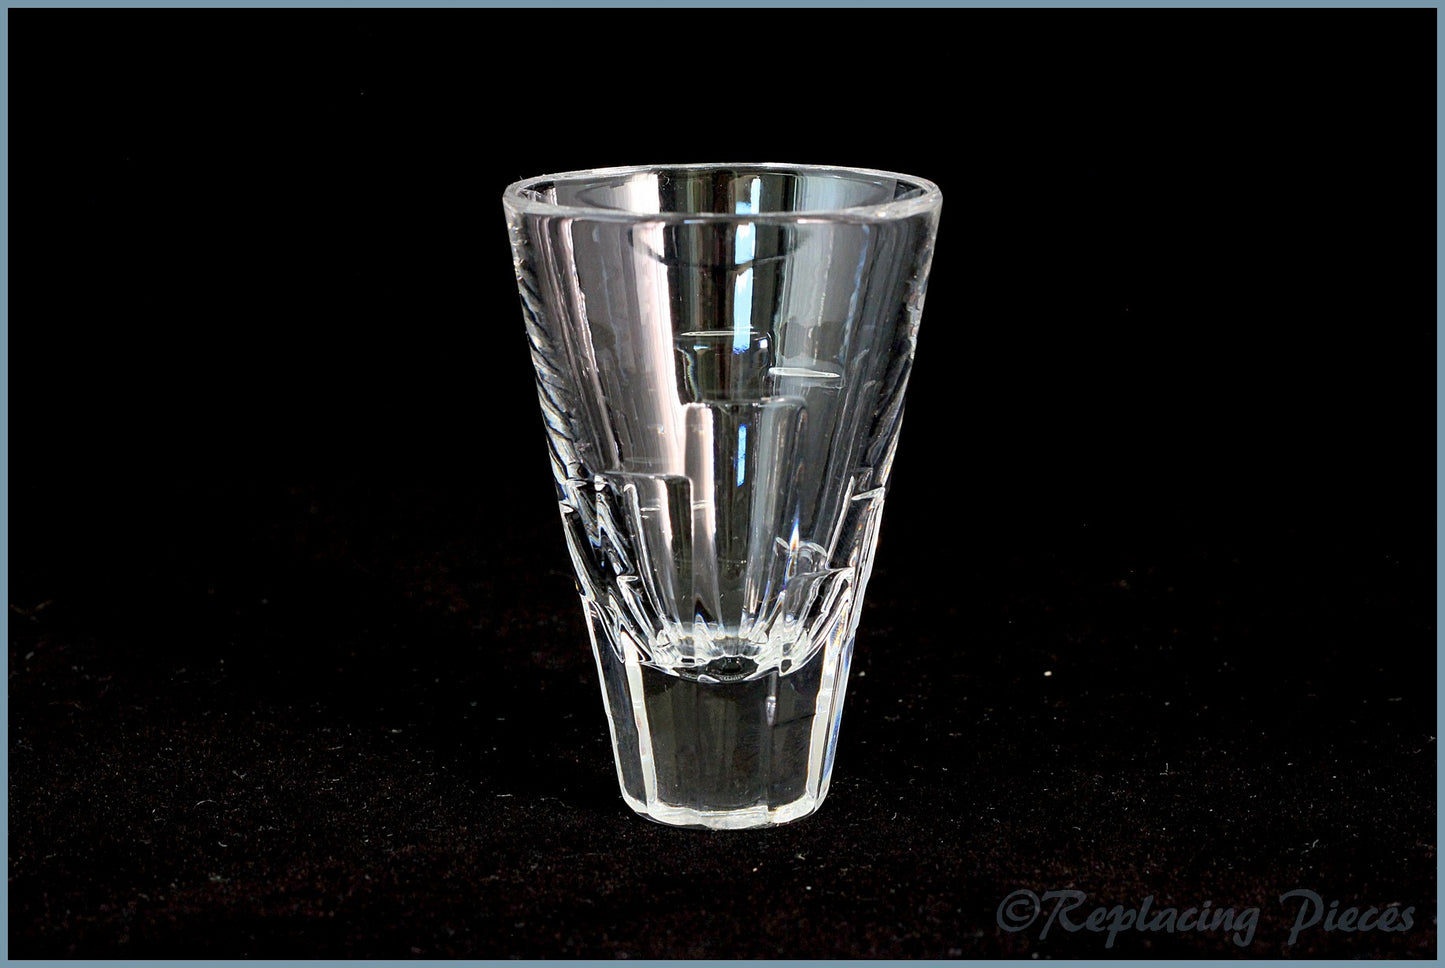 Stuart Crystal - Ice (By Jasper Conran) - Shot Glass